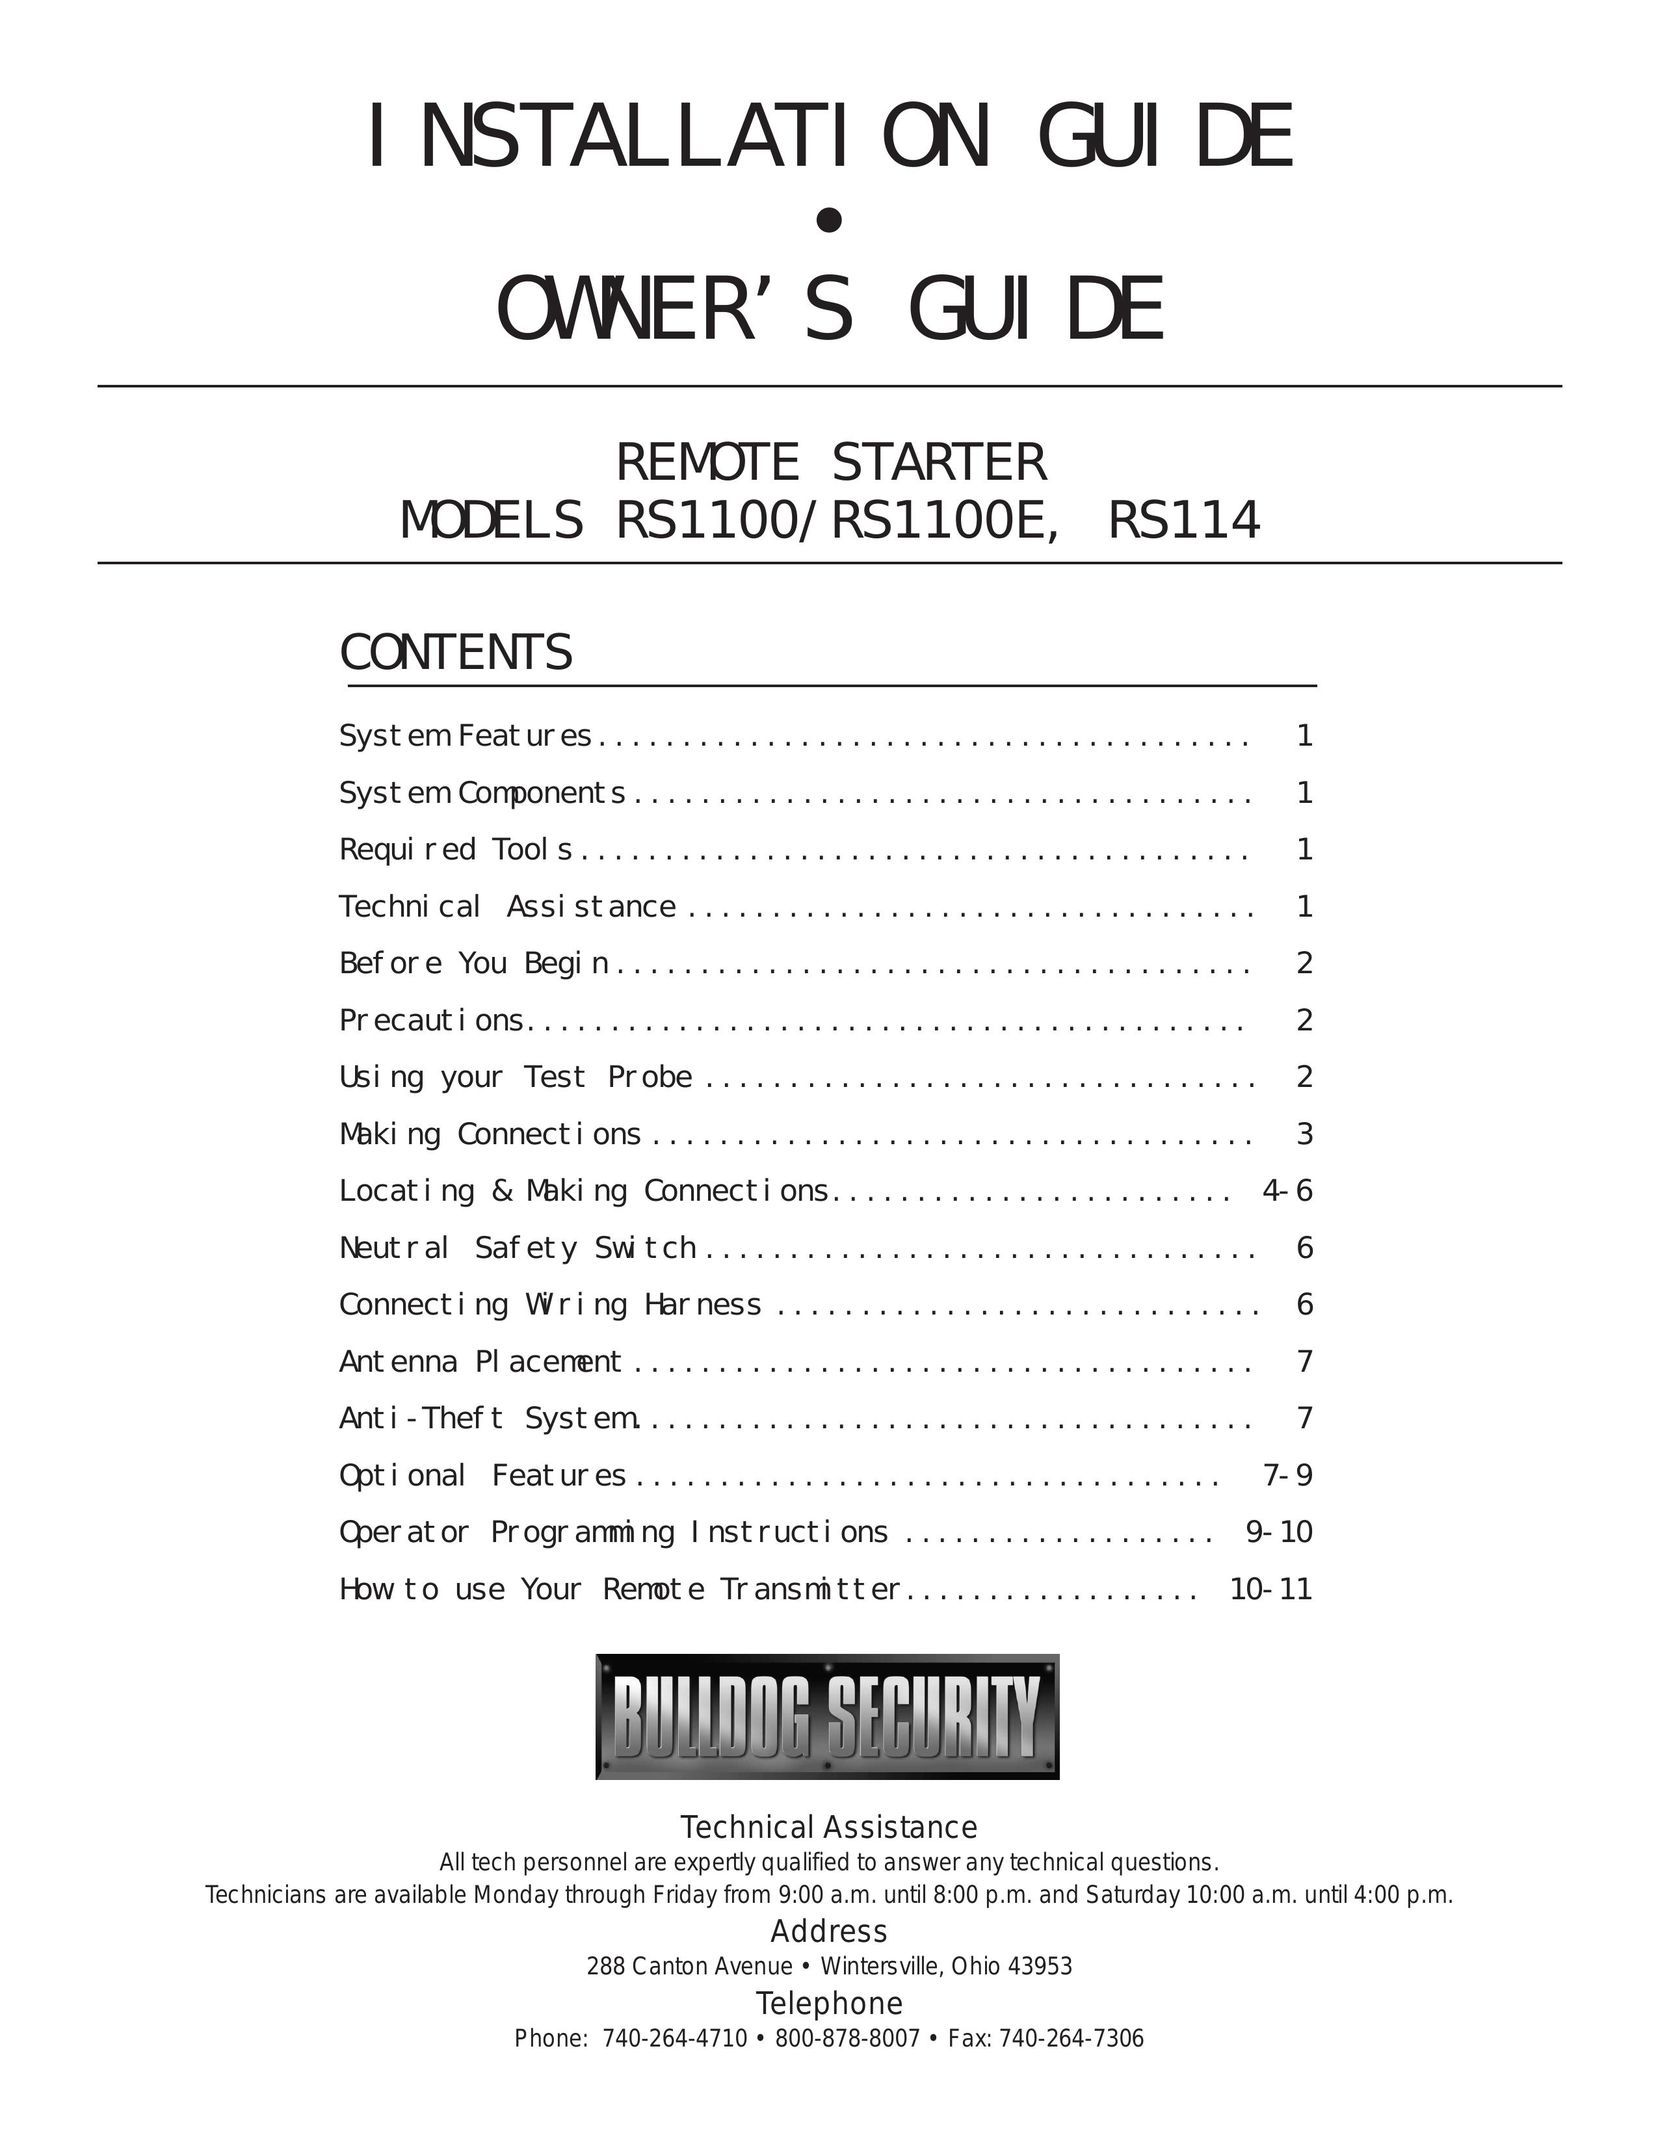 Bulldog Security RS114 Universal Remote User Manual